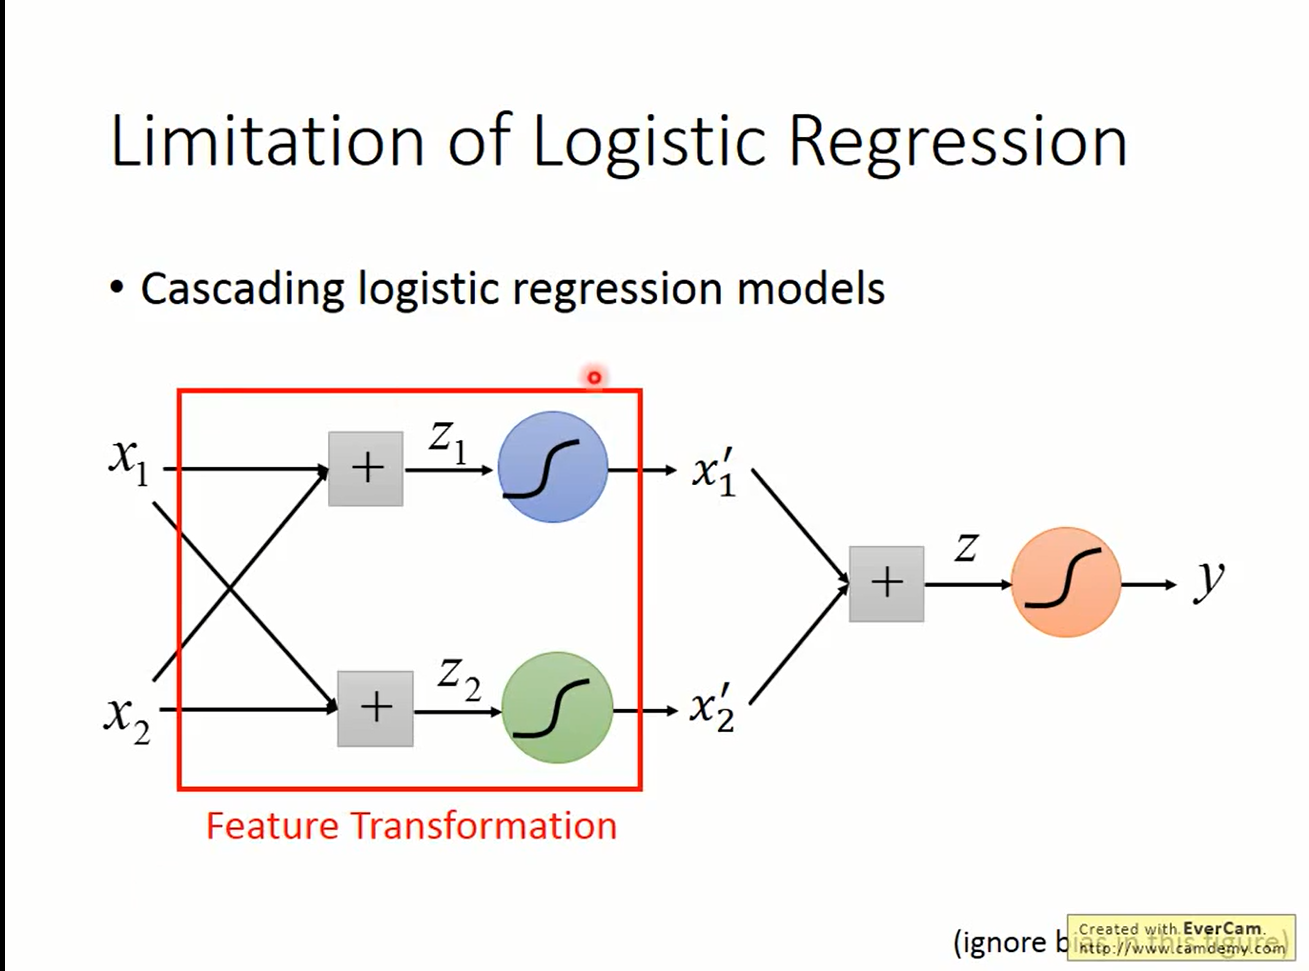 cascading_logistic_regression